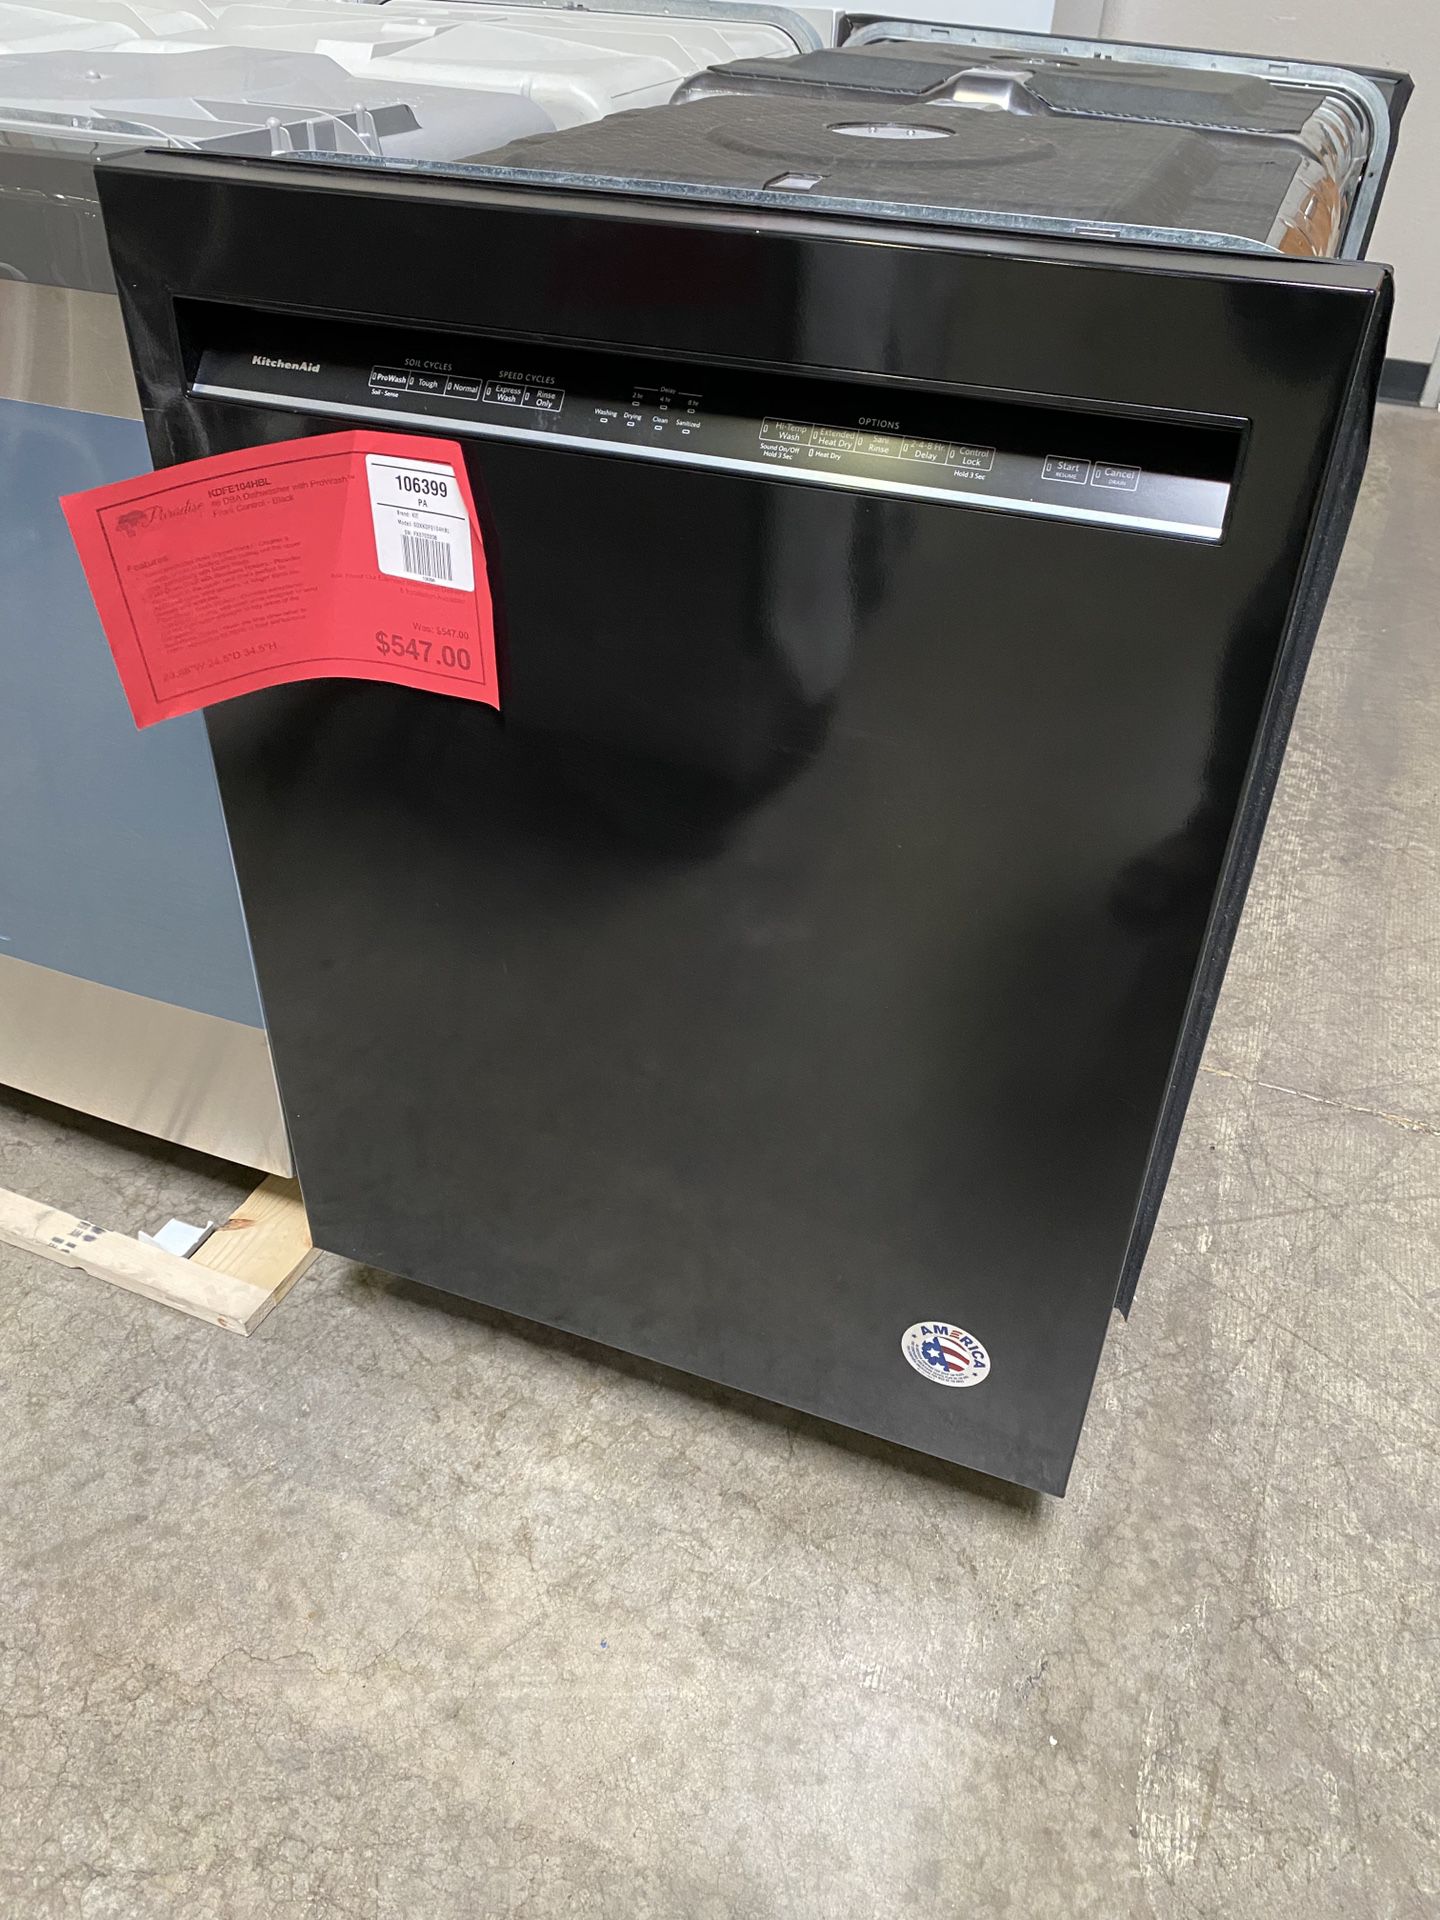 New Discounted KitchenAid Dishwasher 1yr Manufacturers Warranty